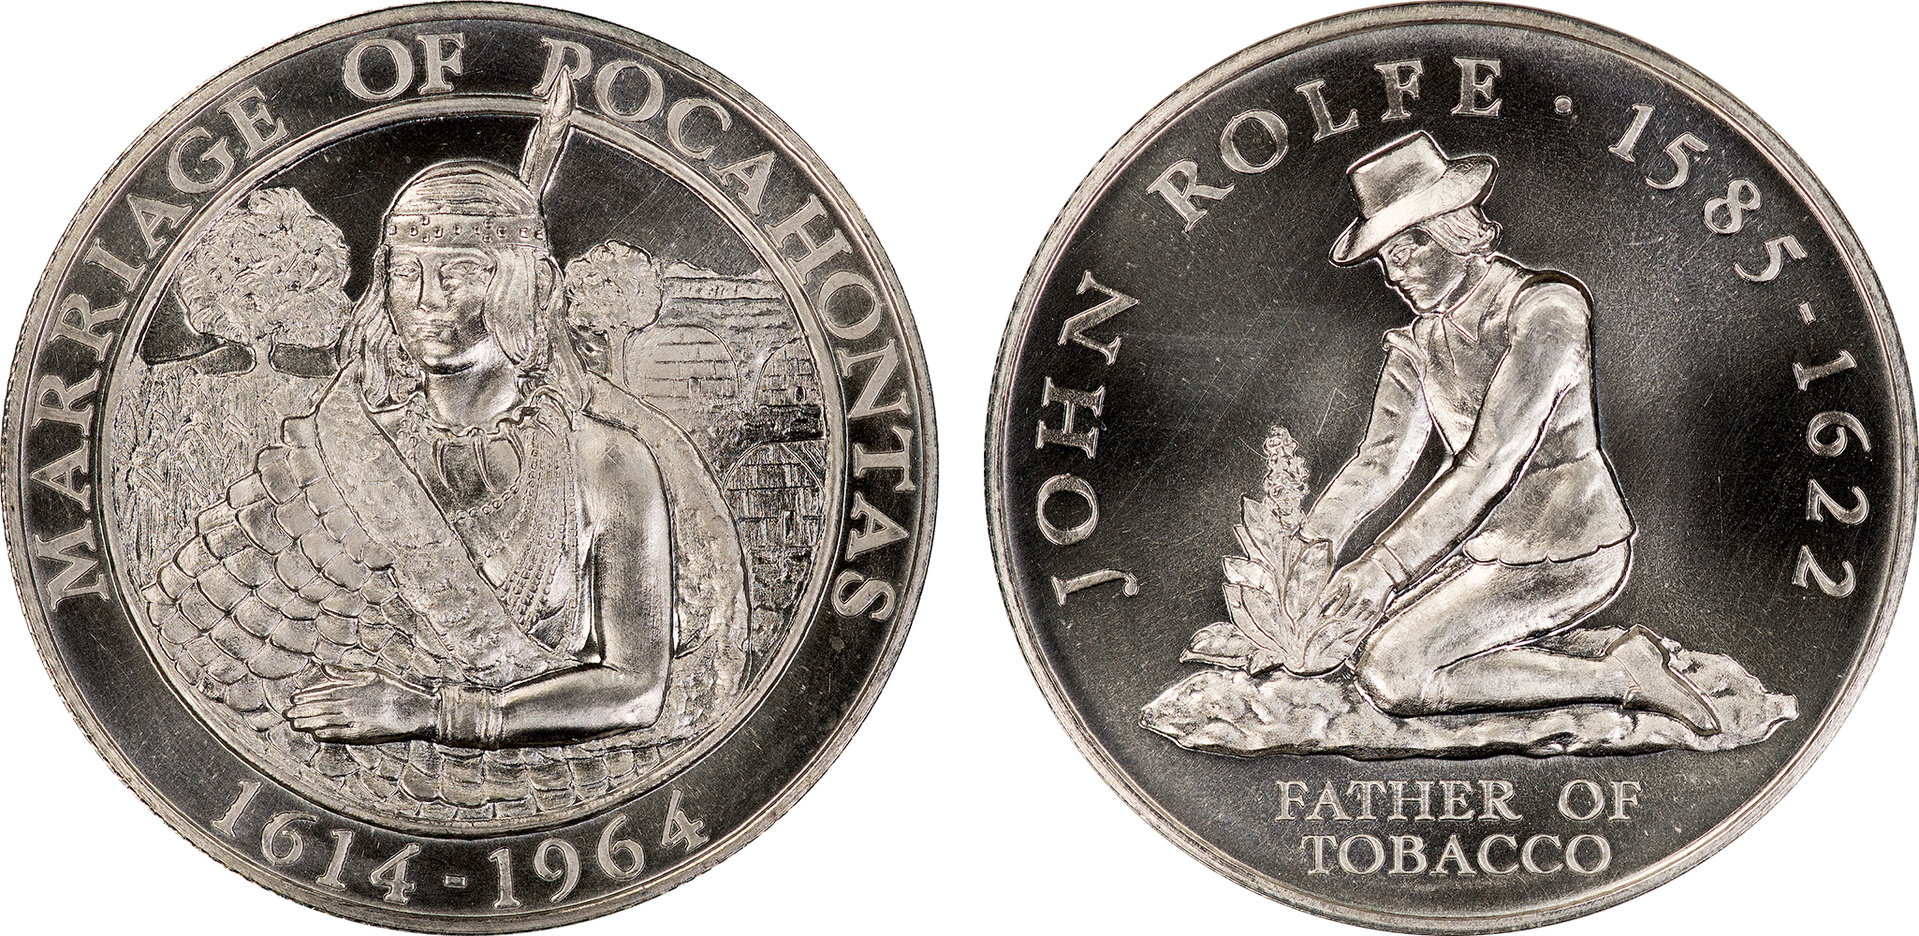 Heraldic Art Medal - 18 - 1964 Pocahontas.jpg